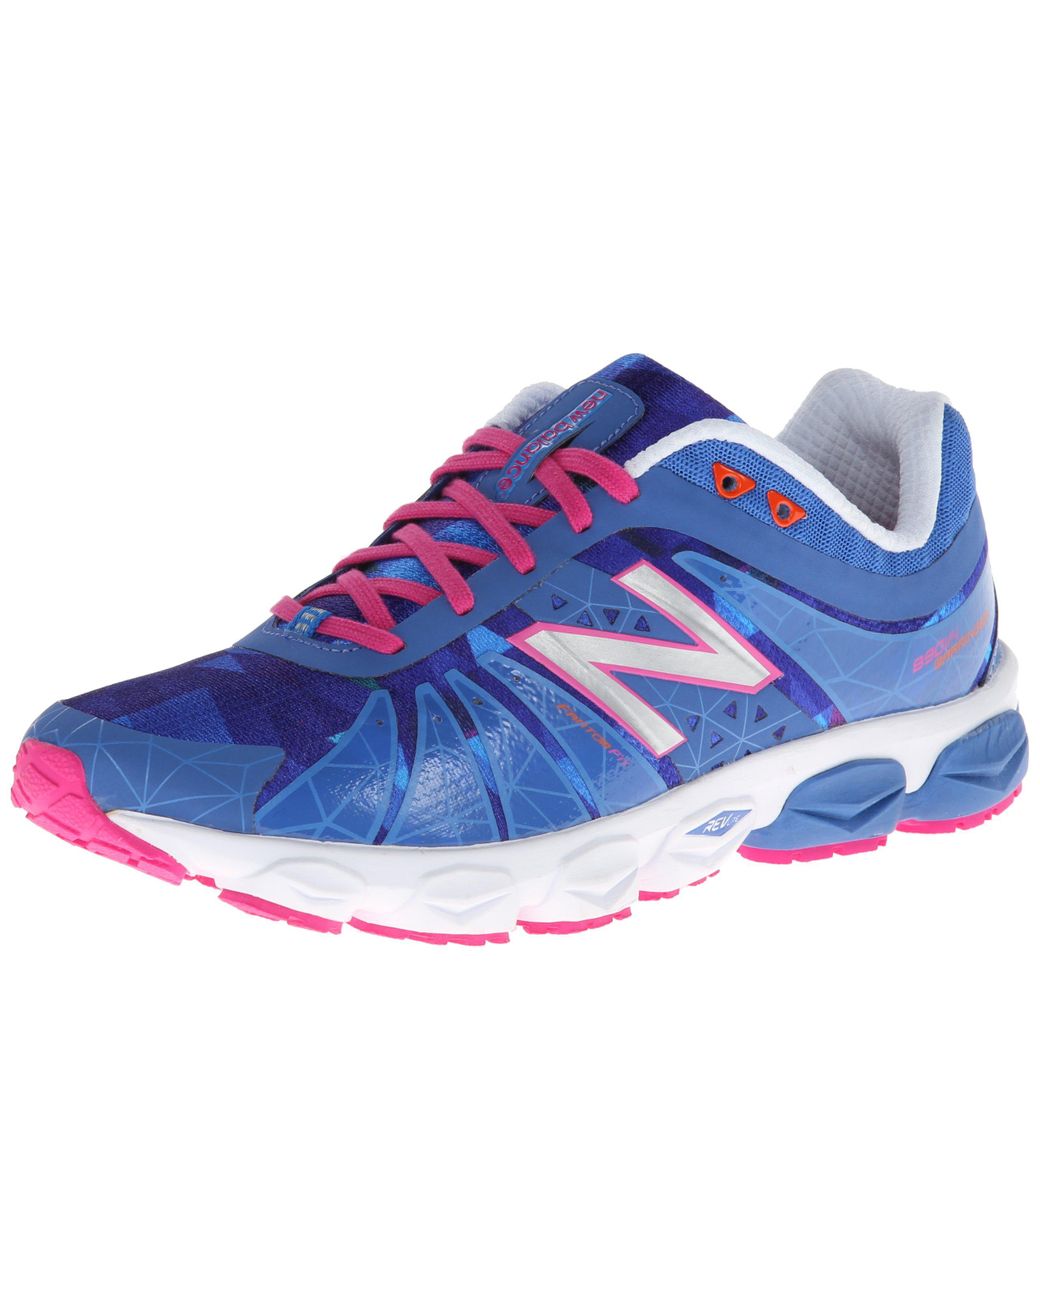 New Balance 890 V4 Running Shoe in Blue | Lyst